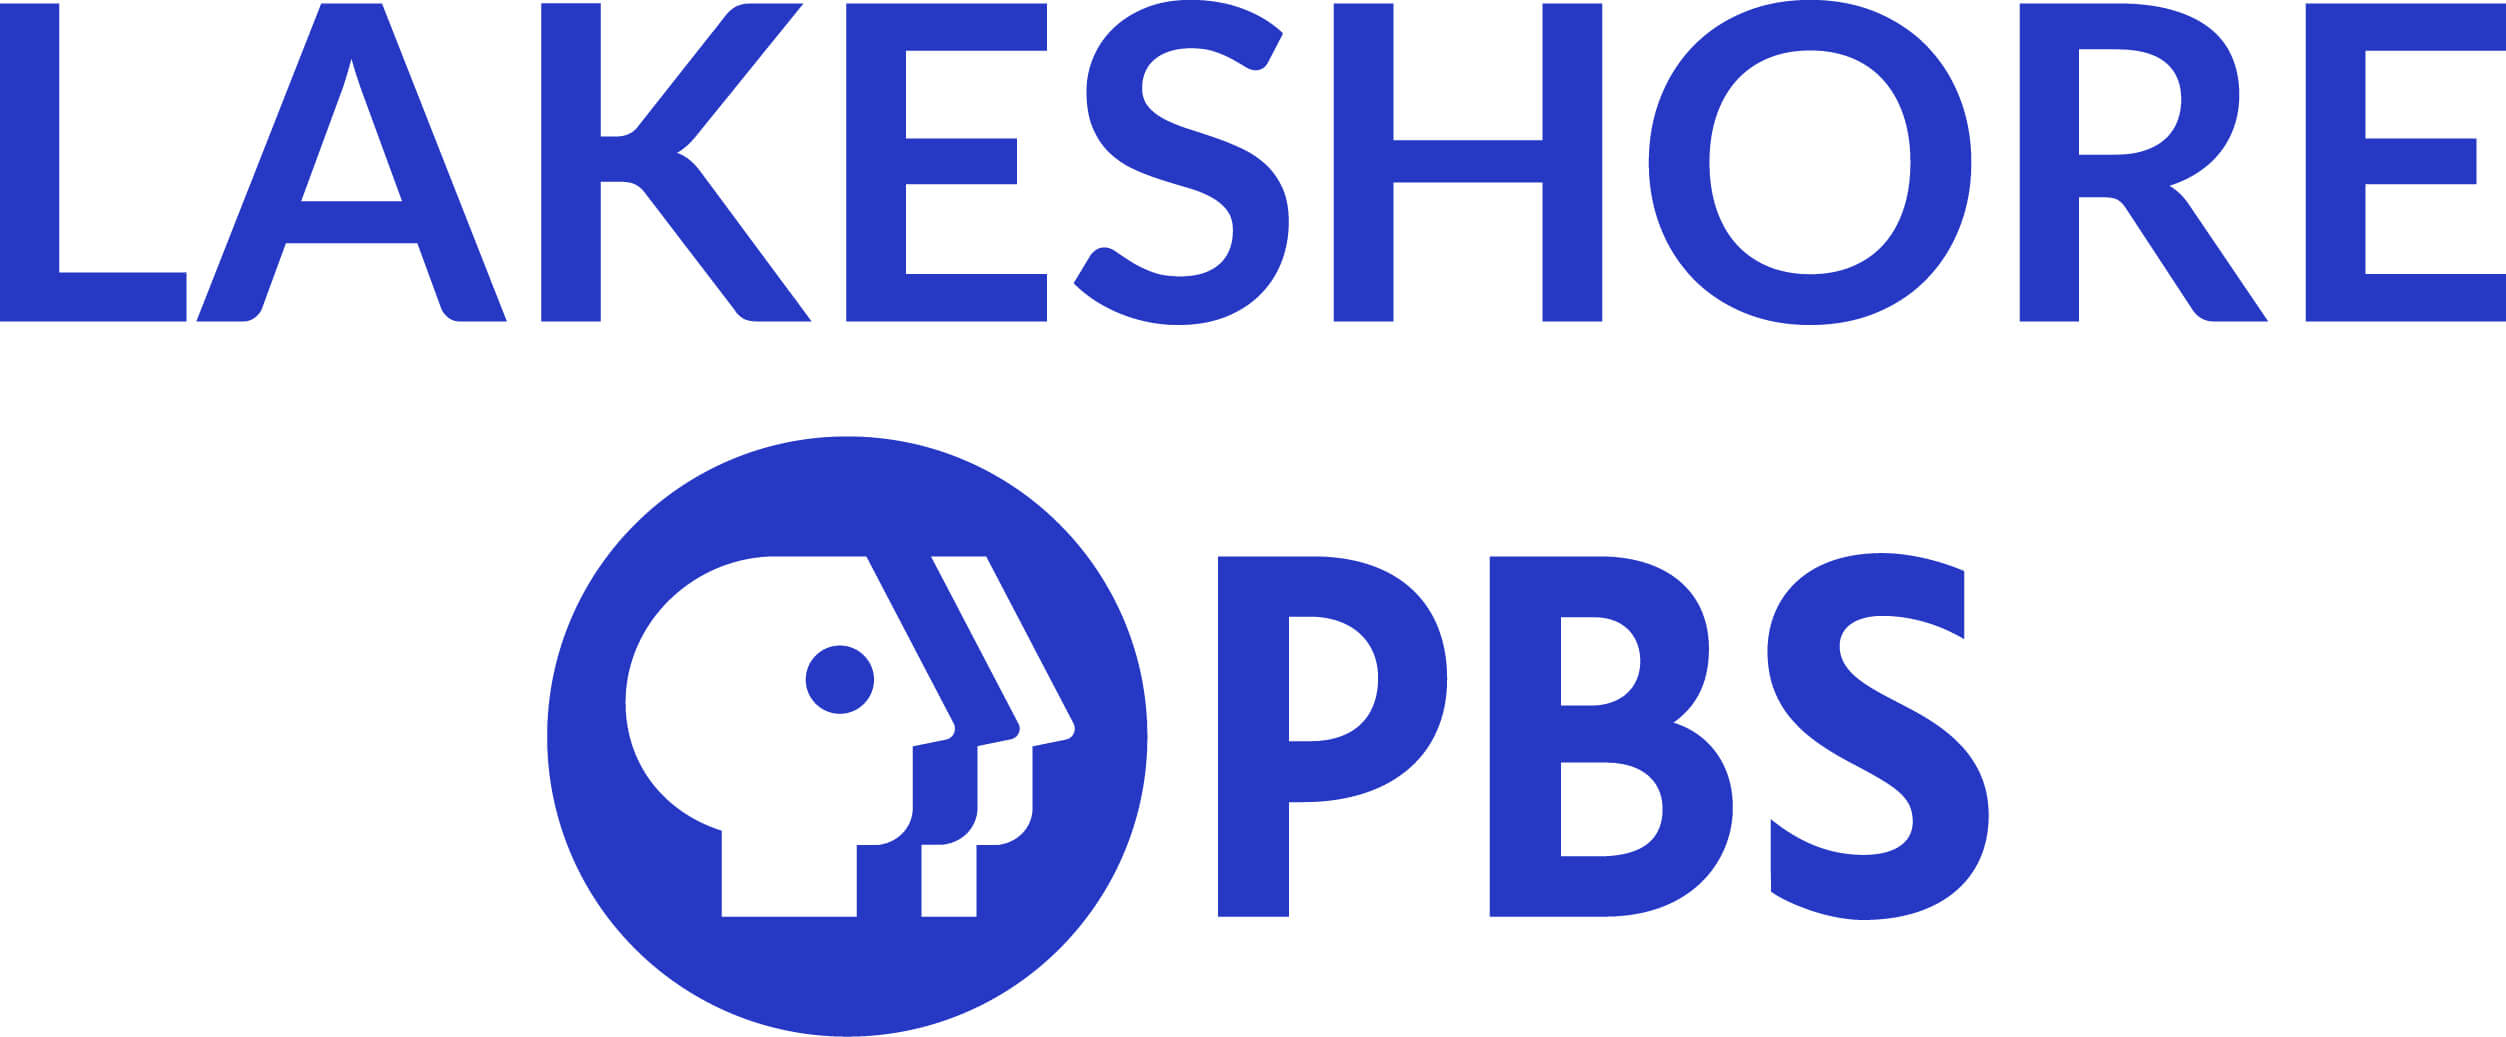 Lakeshore PBS